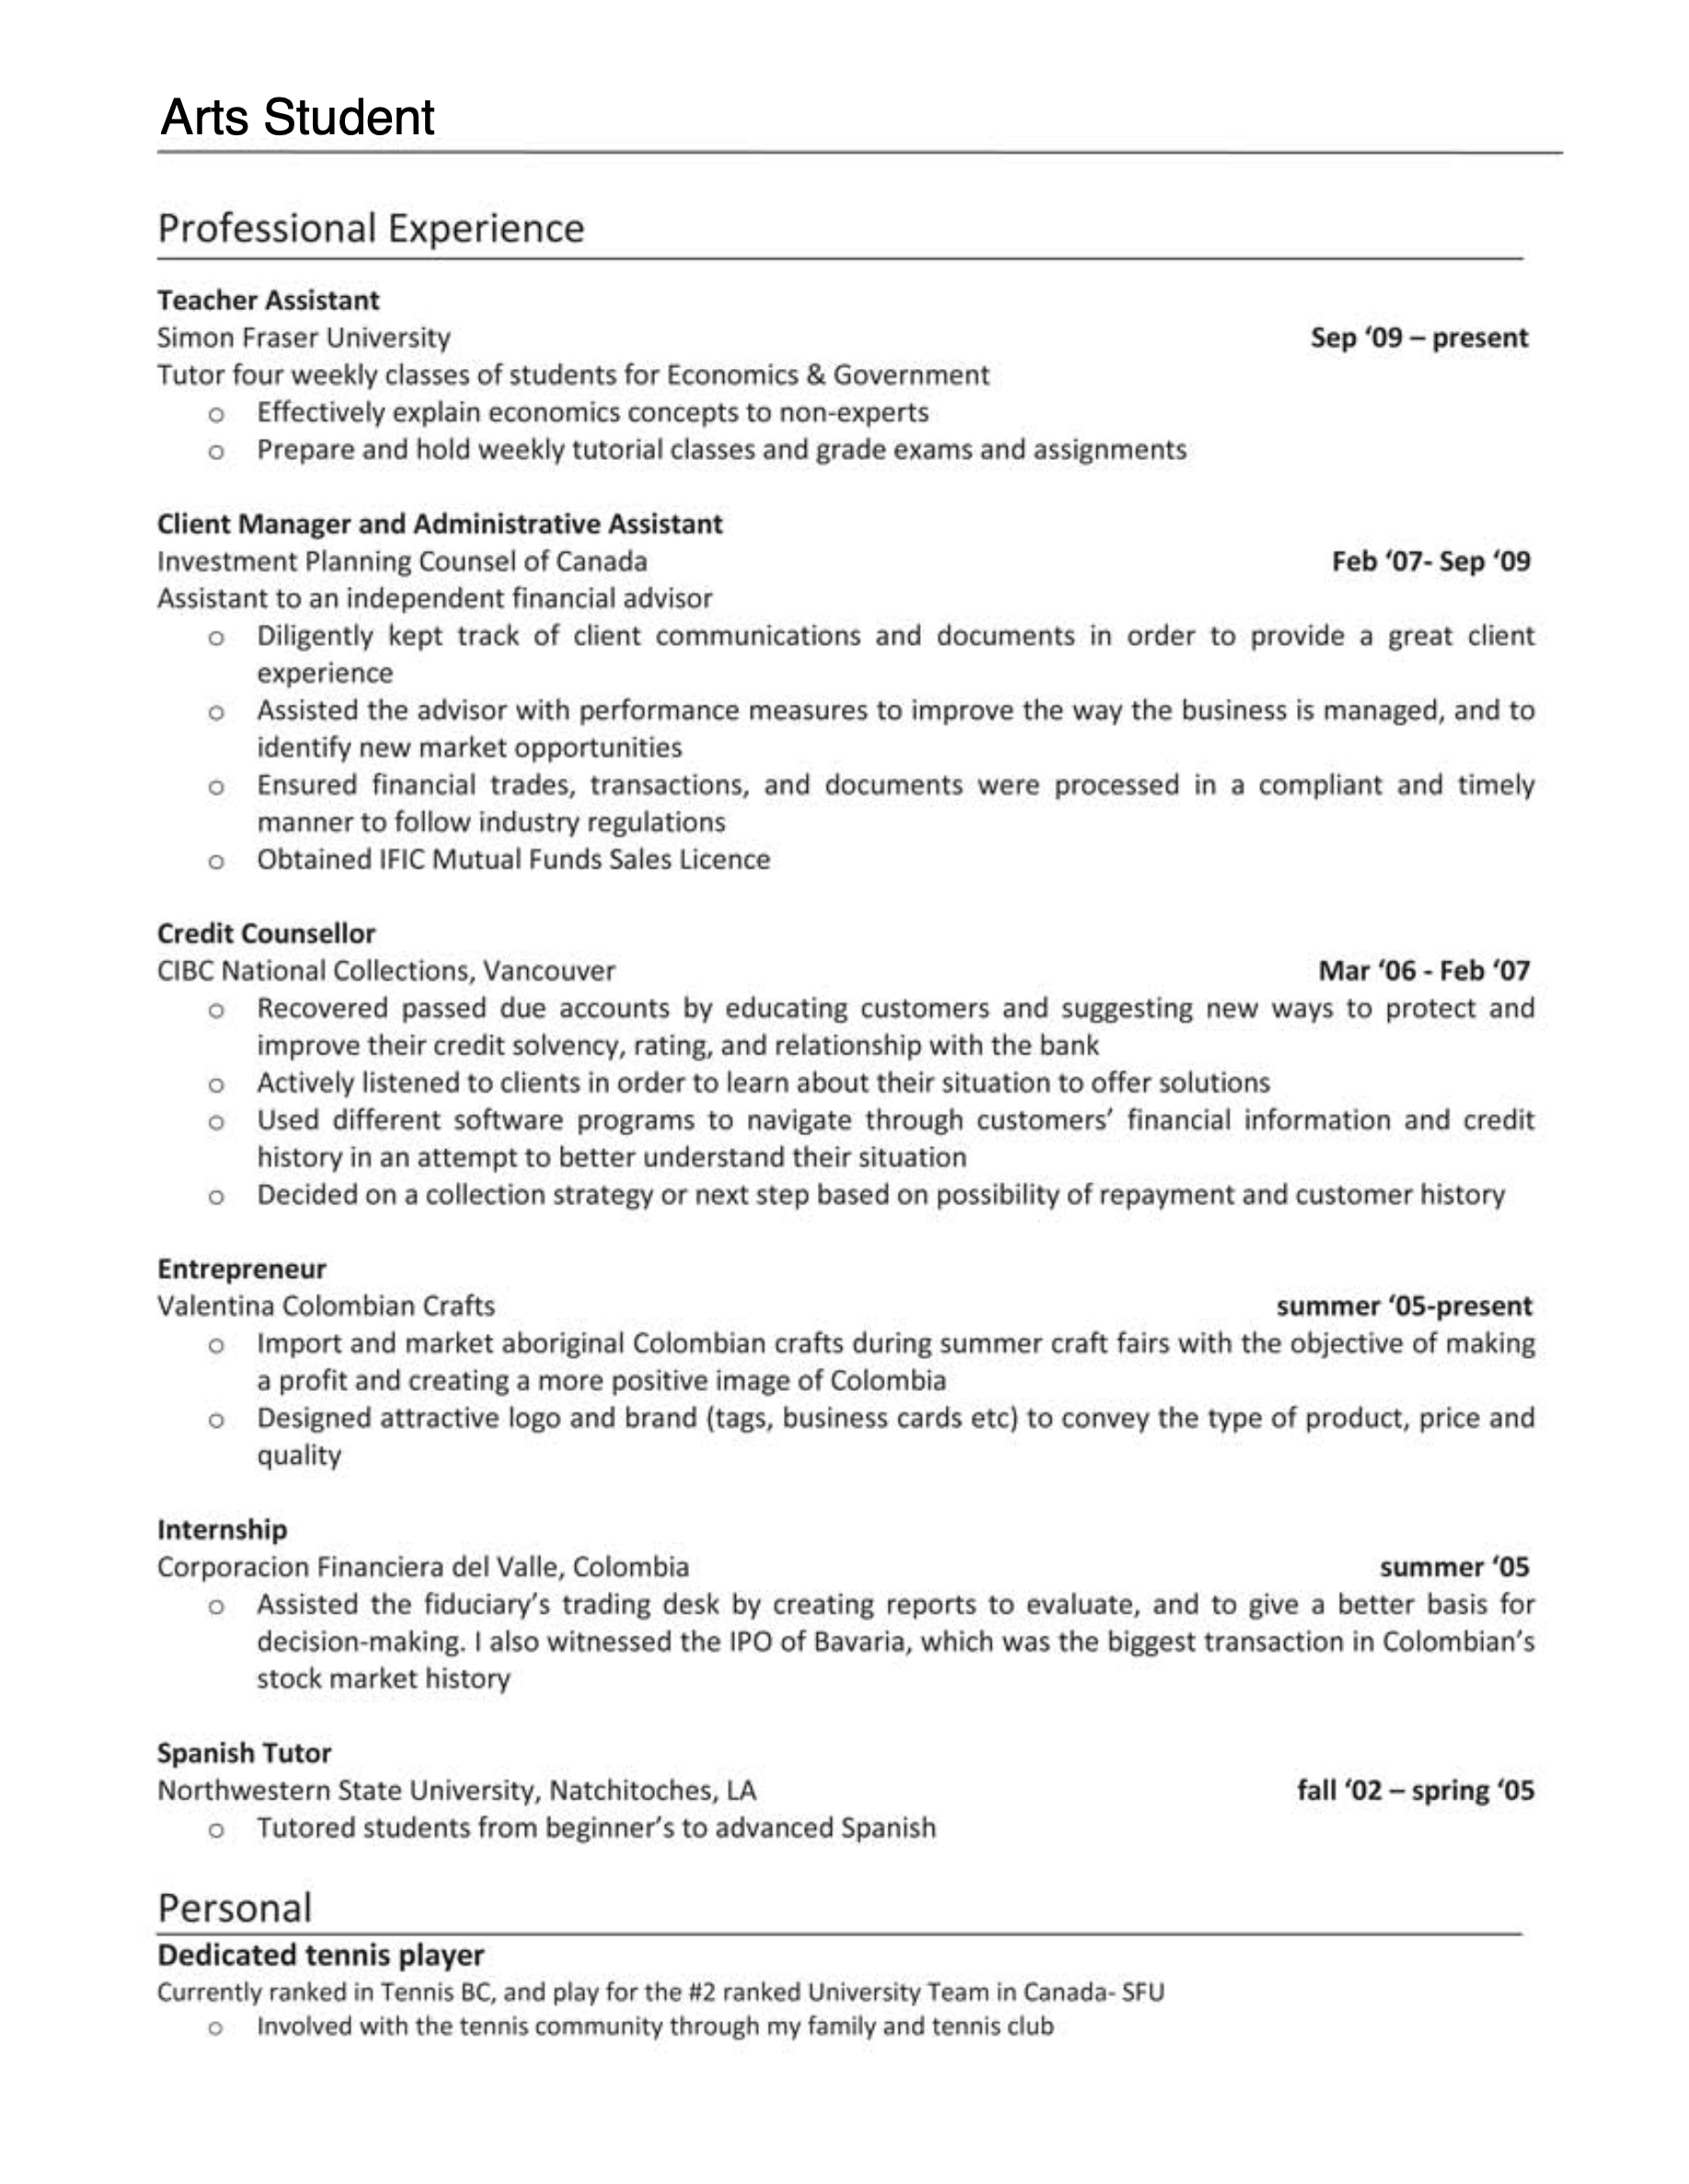 Arts Resume Sample page 2